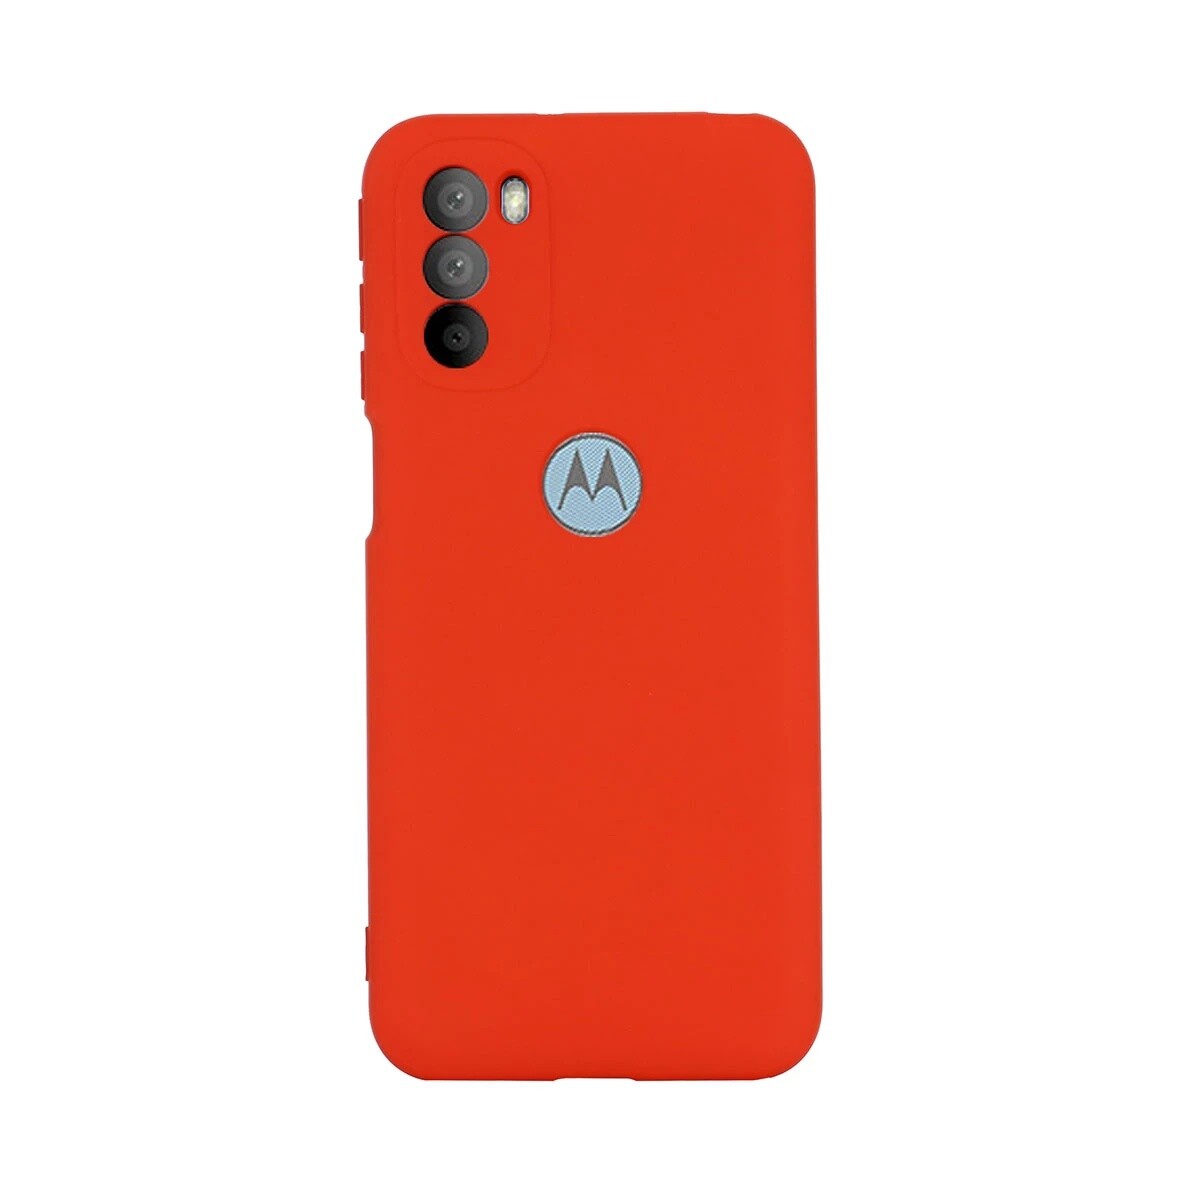 Protector Funda Case de Silicona para Motorola Moto G51 - Rojo 